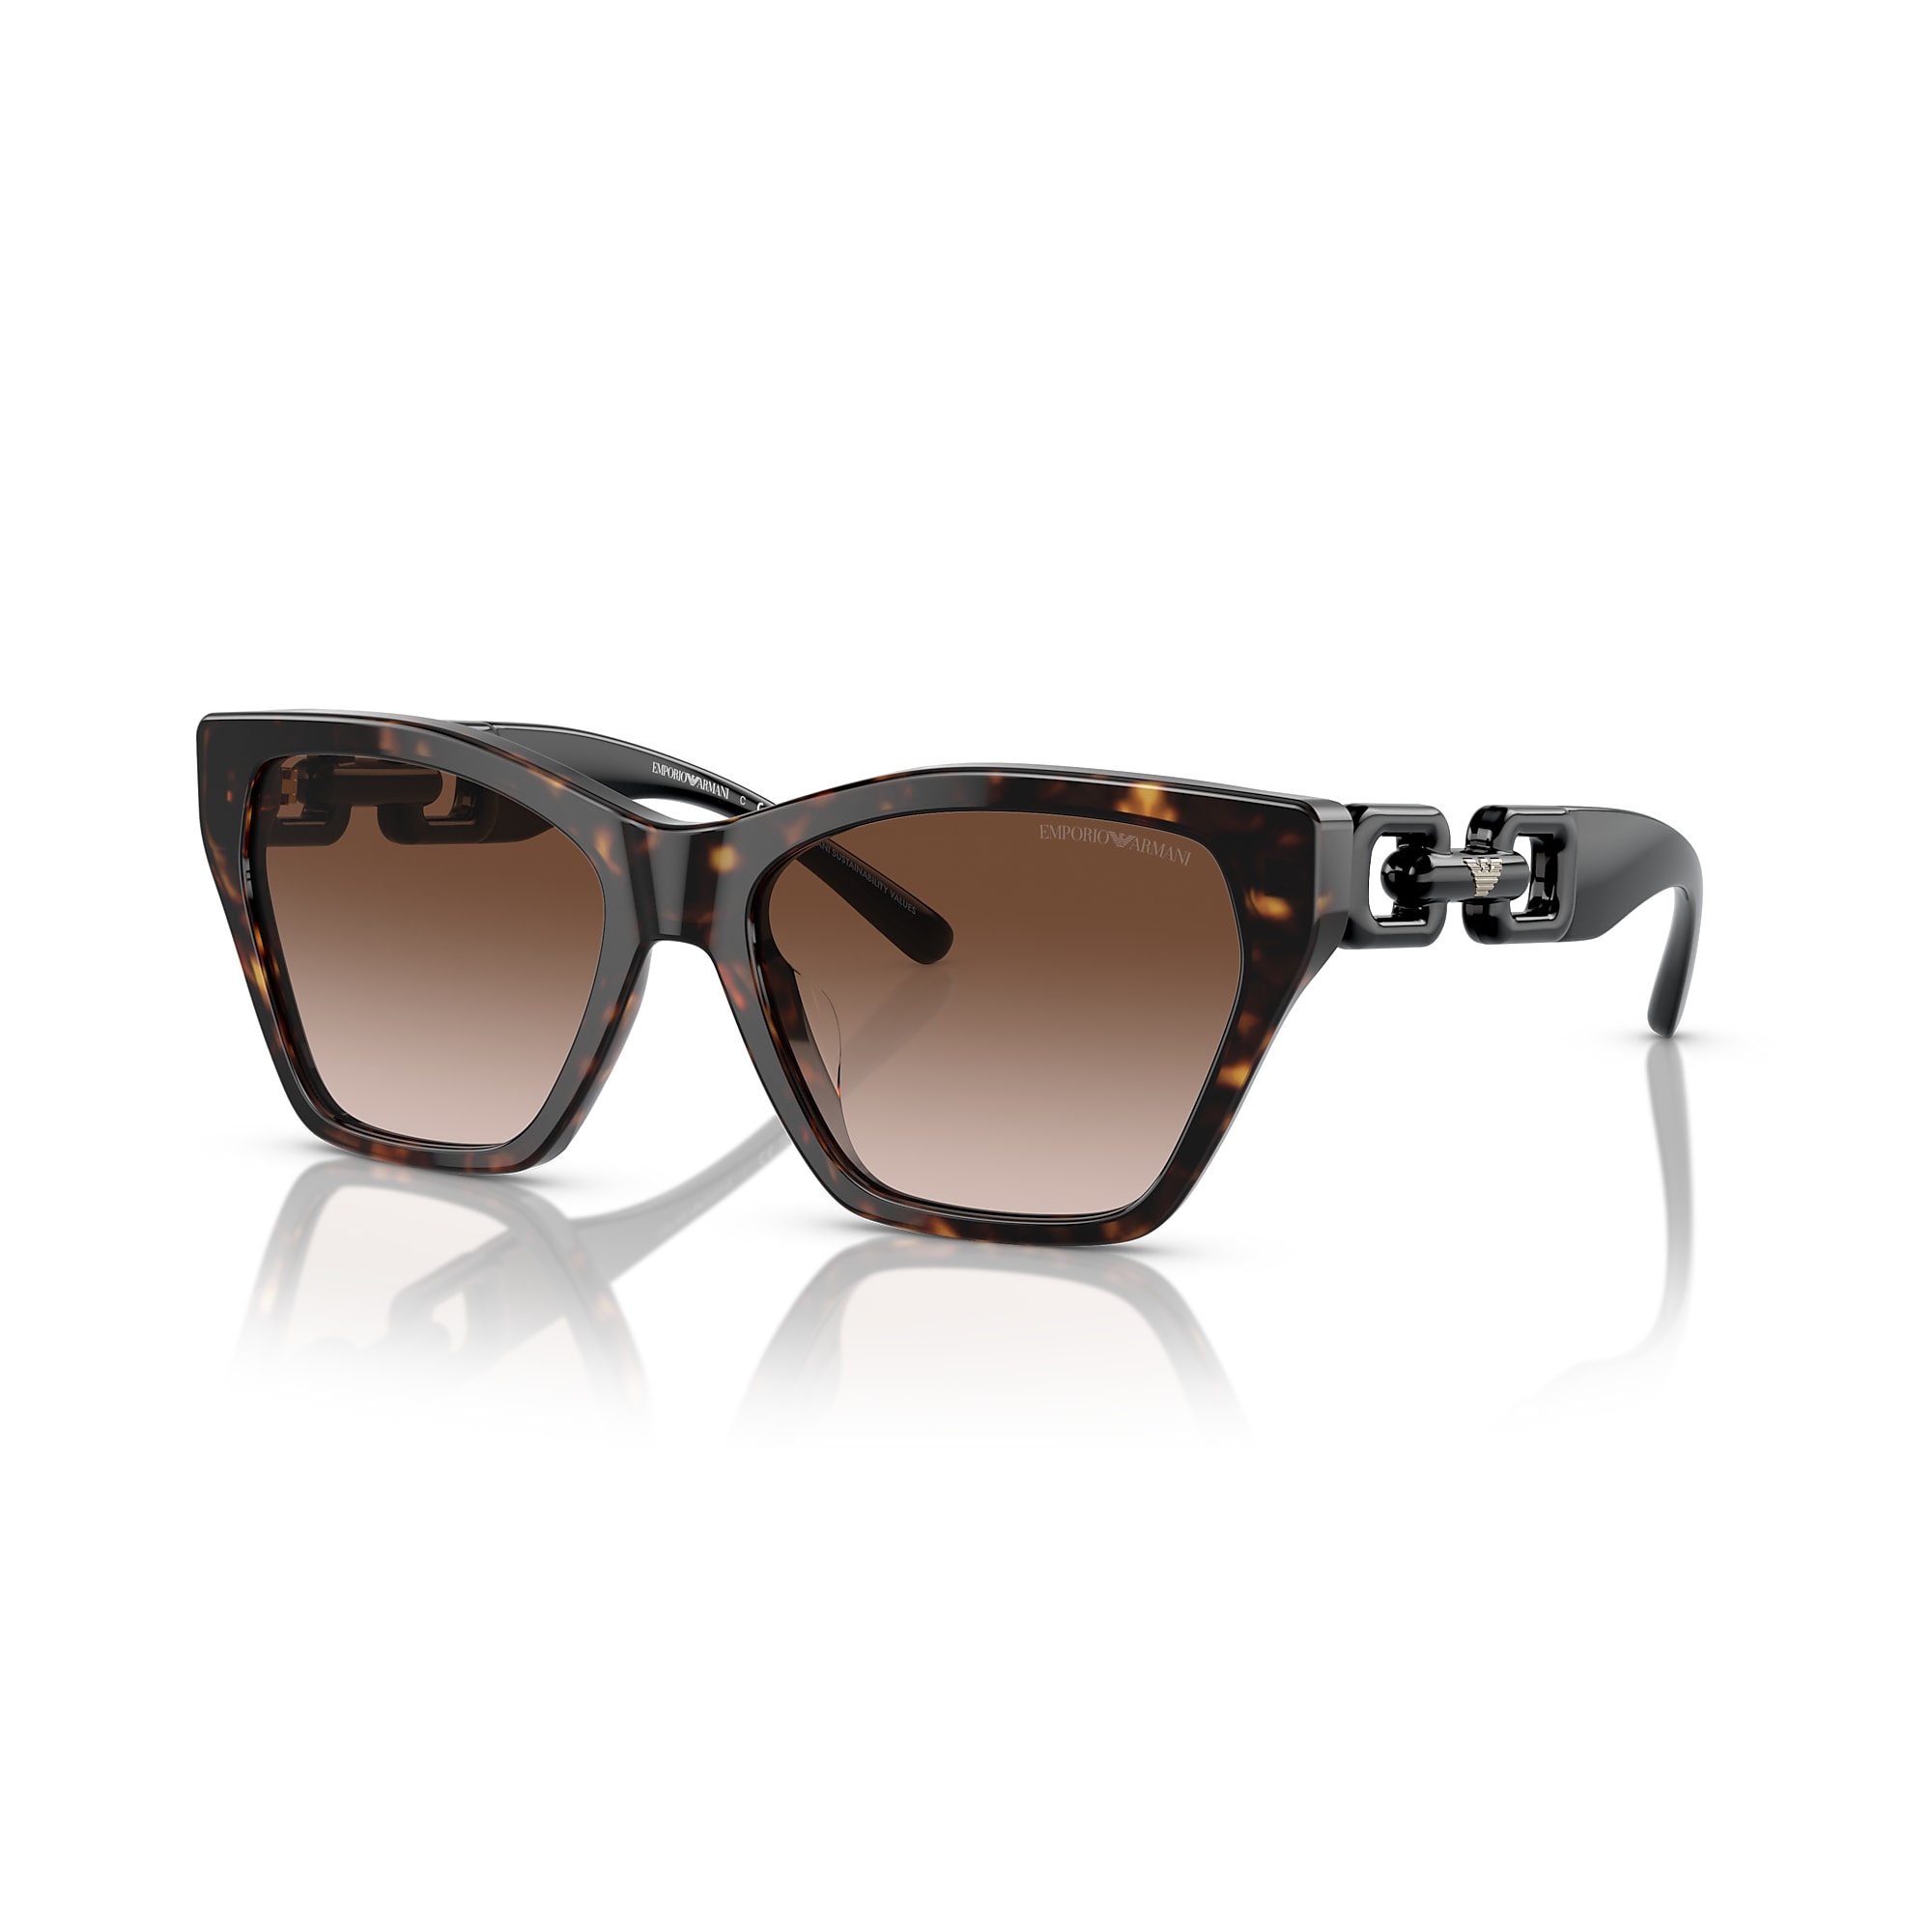 Emporio Armani Shiny Havana Sunglasses | Glasses.com® | Free Shipping